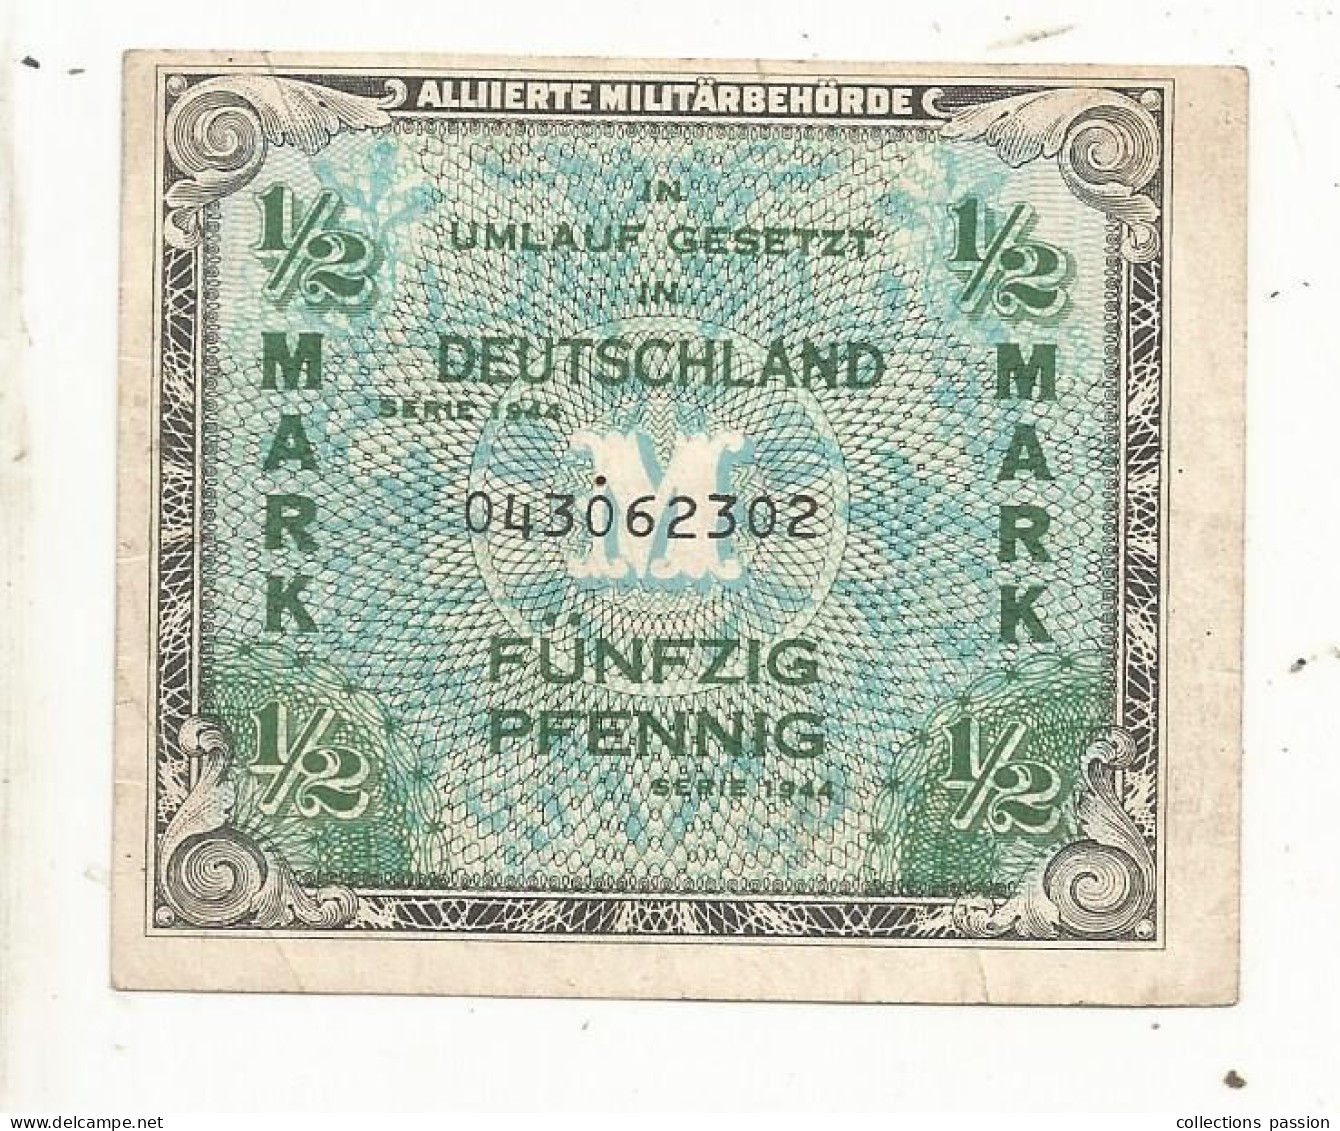 Billet , Allemagne, Allherte Militärbehörde, 1/2 Mark, Fünfzig Pfennig , Série 1944, 2 Scans - 2. WK